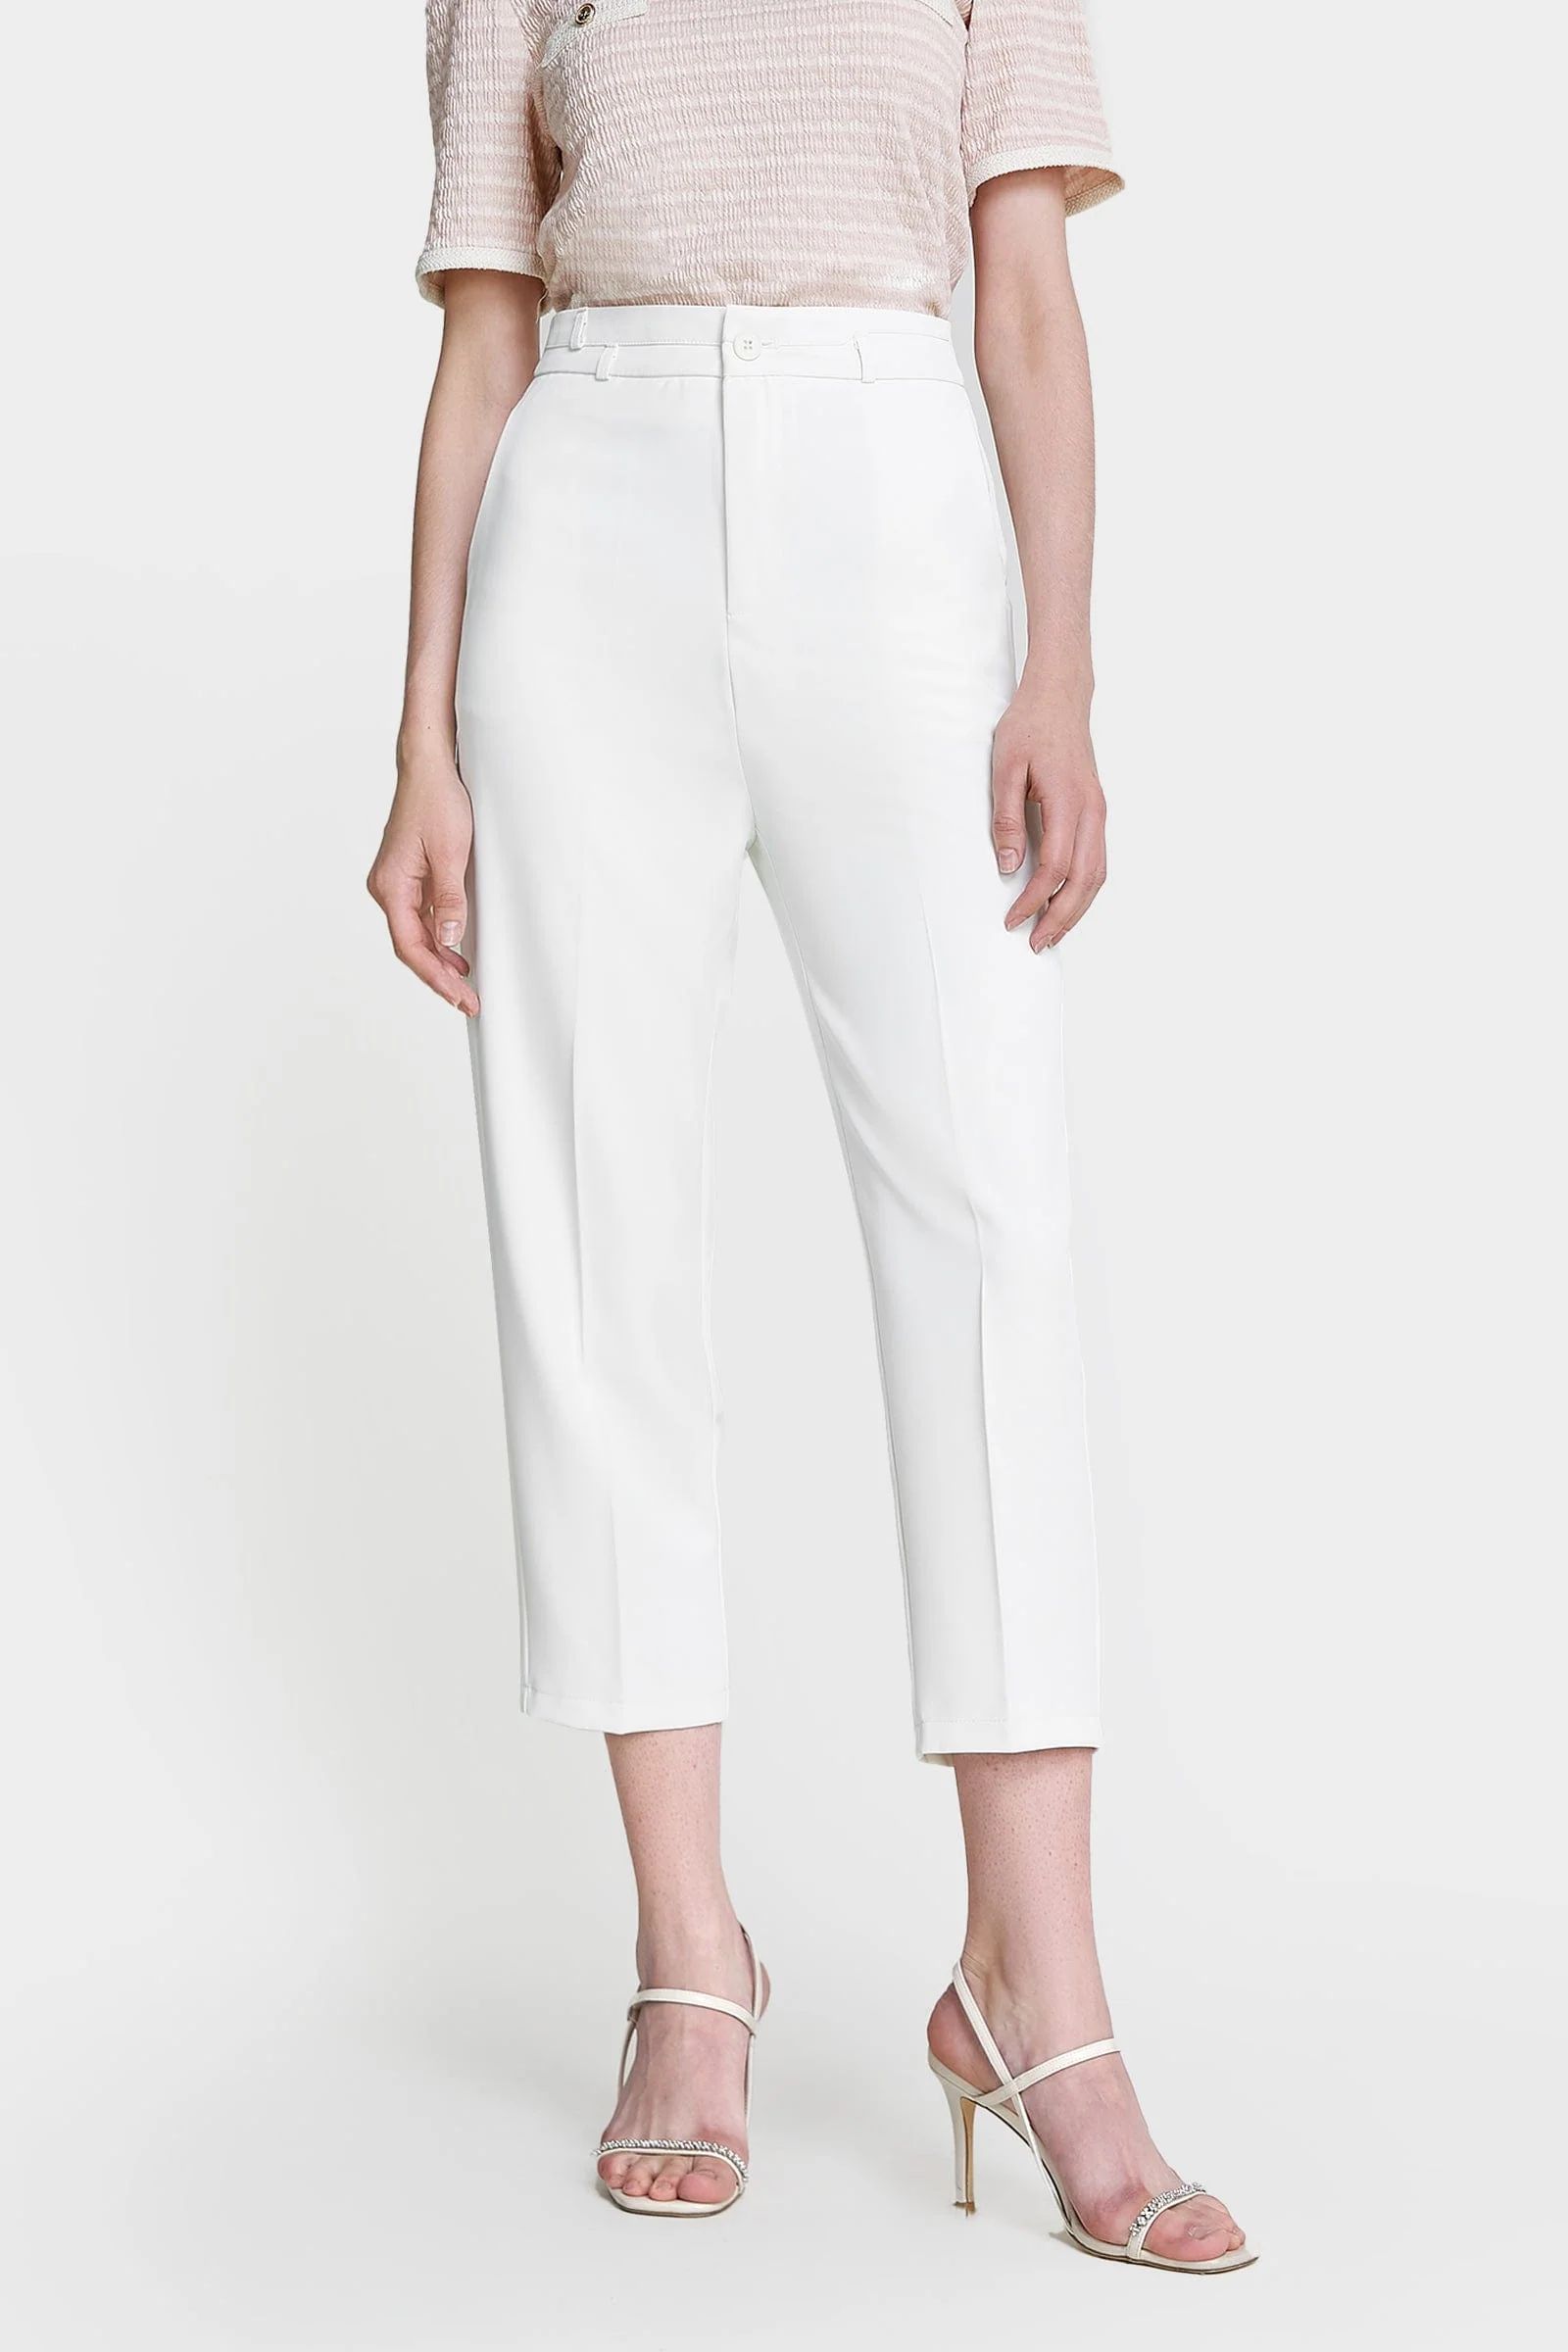 White High Waist Tailored Suit Pants | J.ING